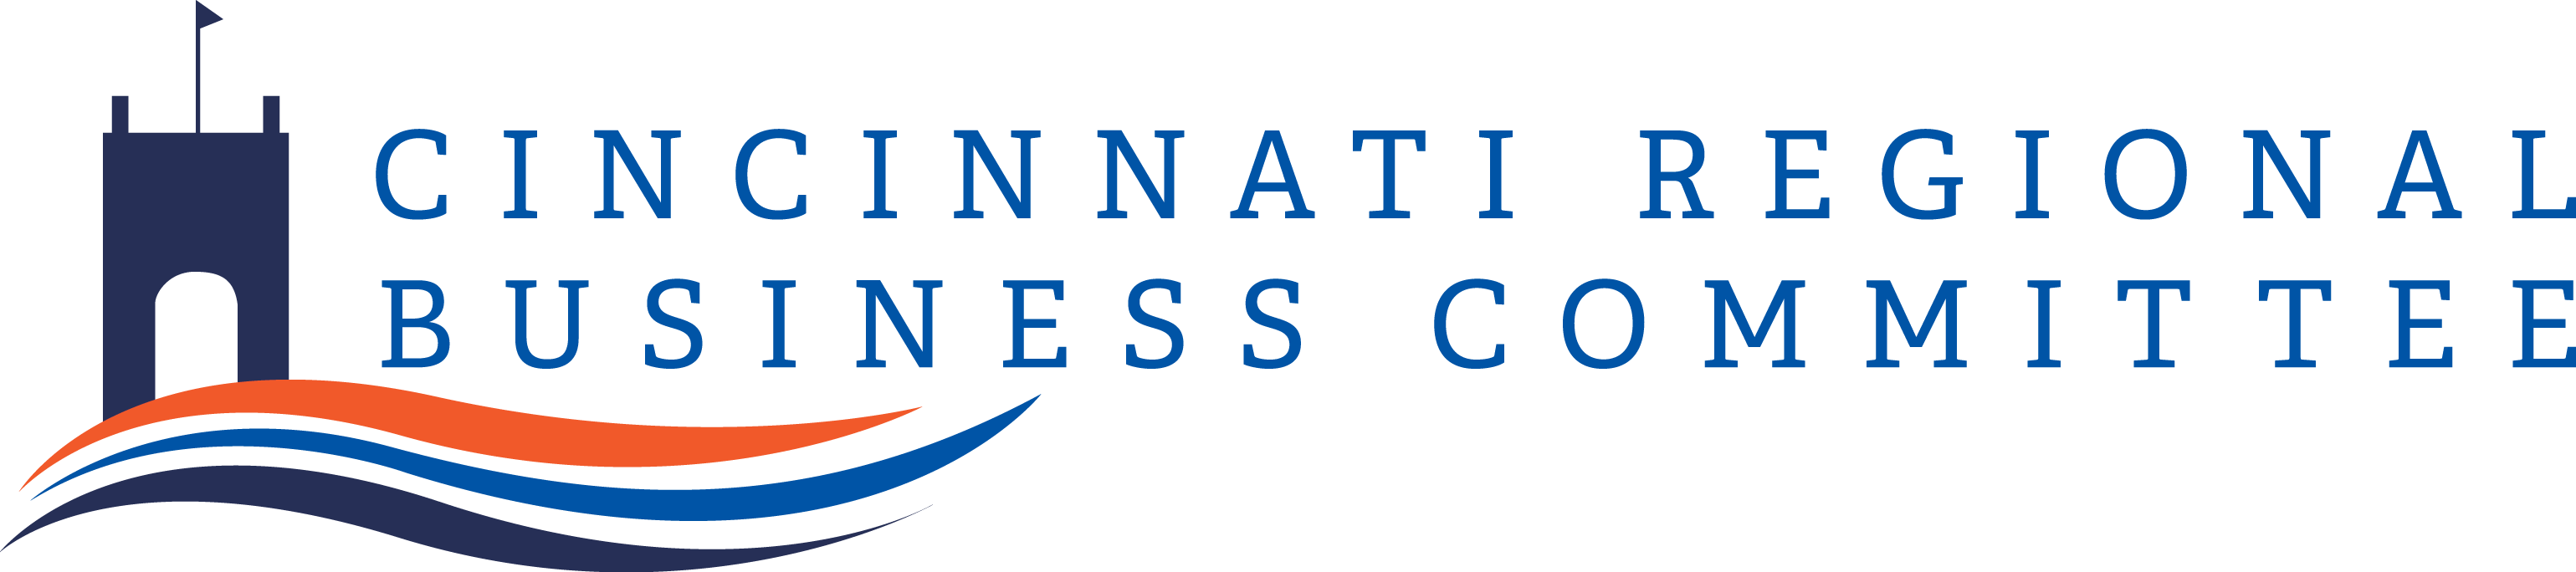 Cincinnati Regional Business Committee logo